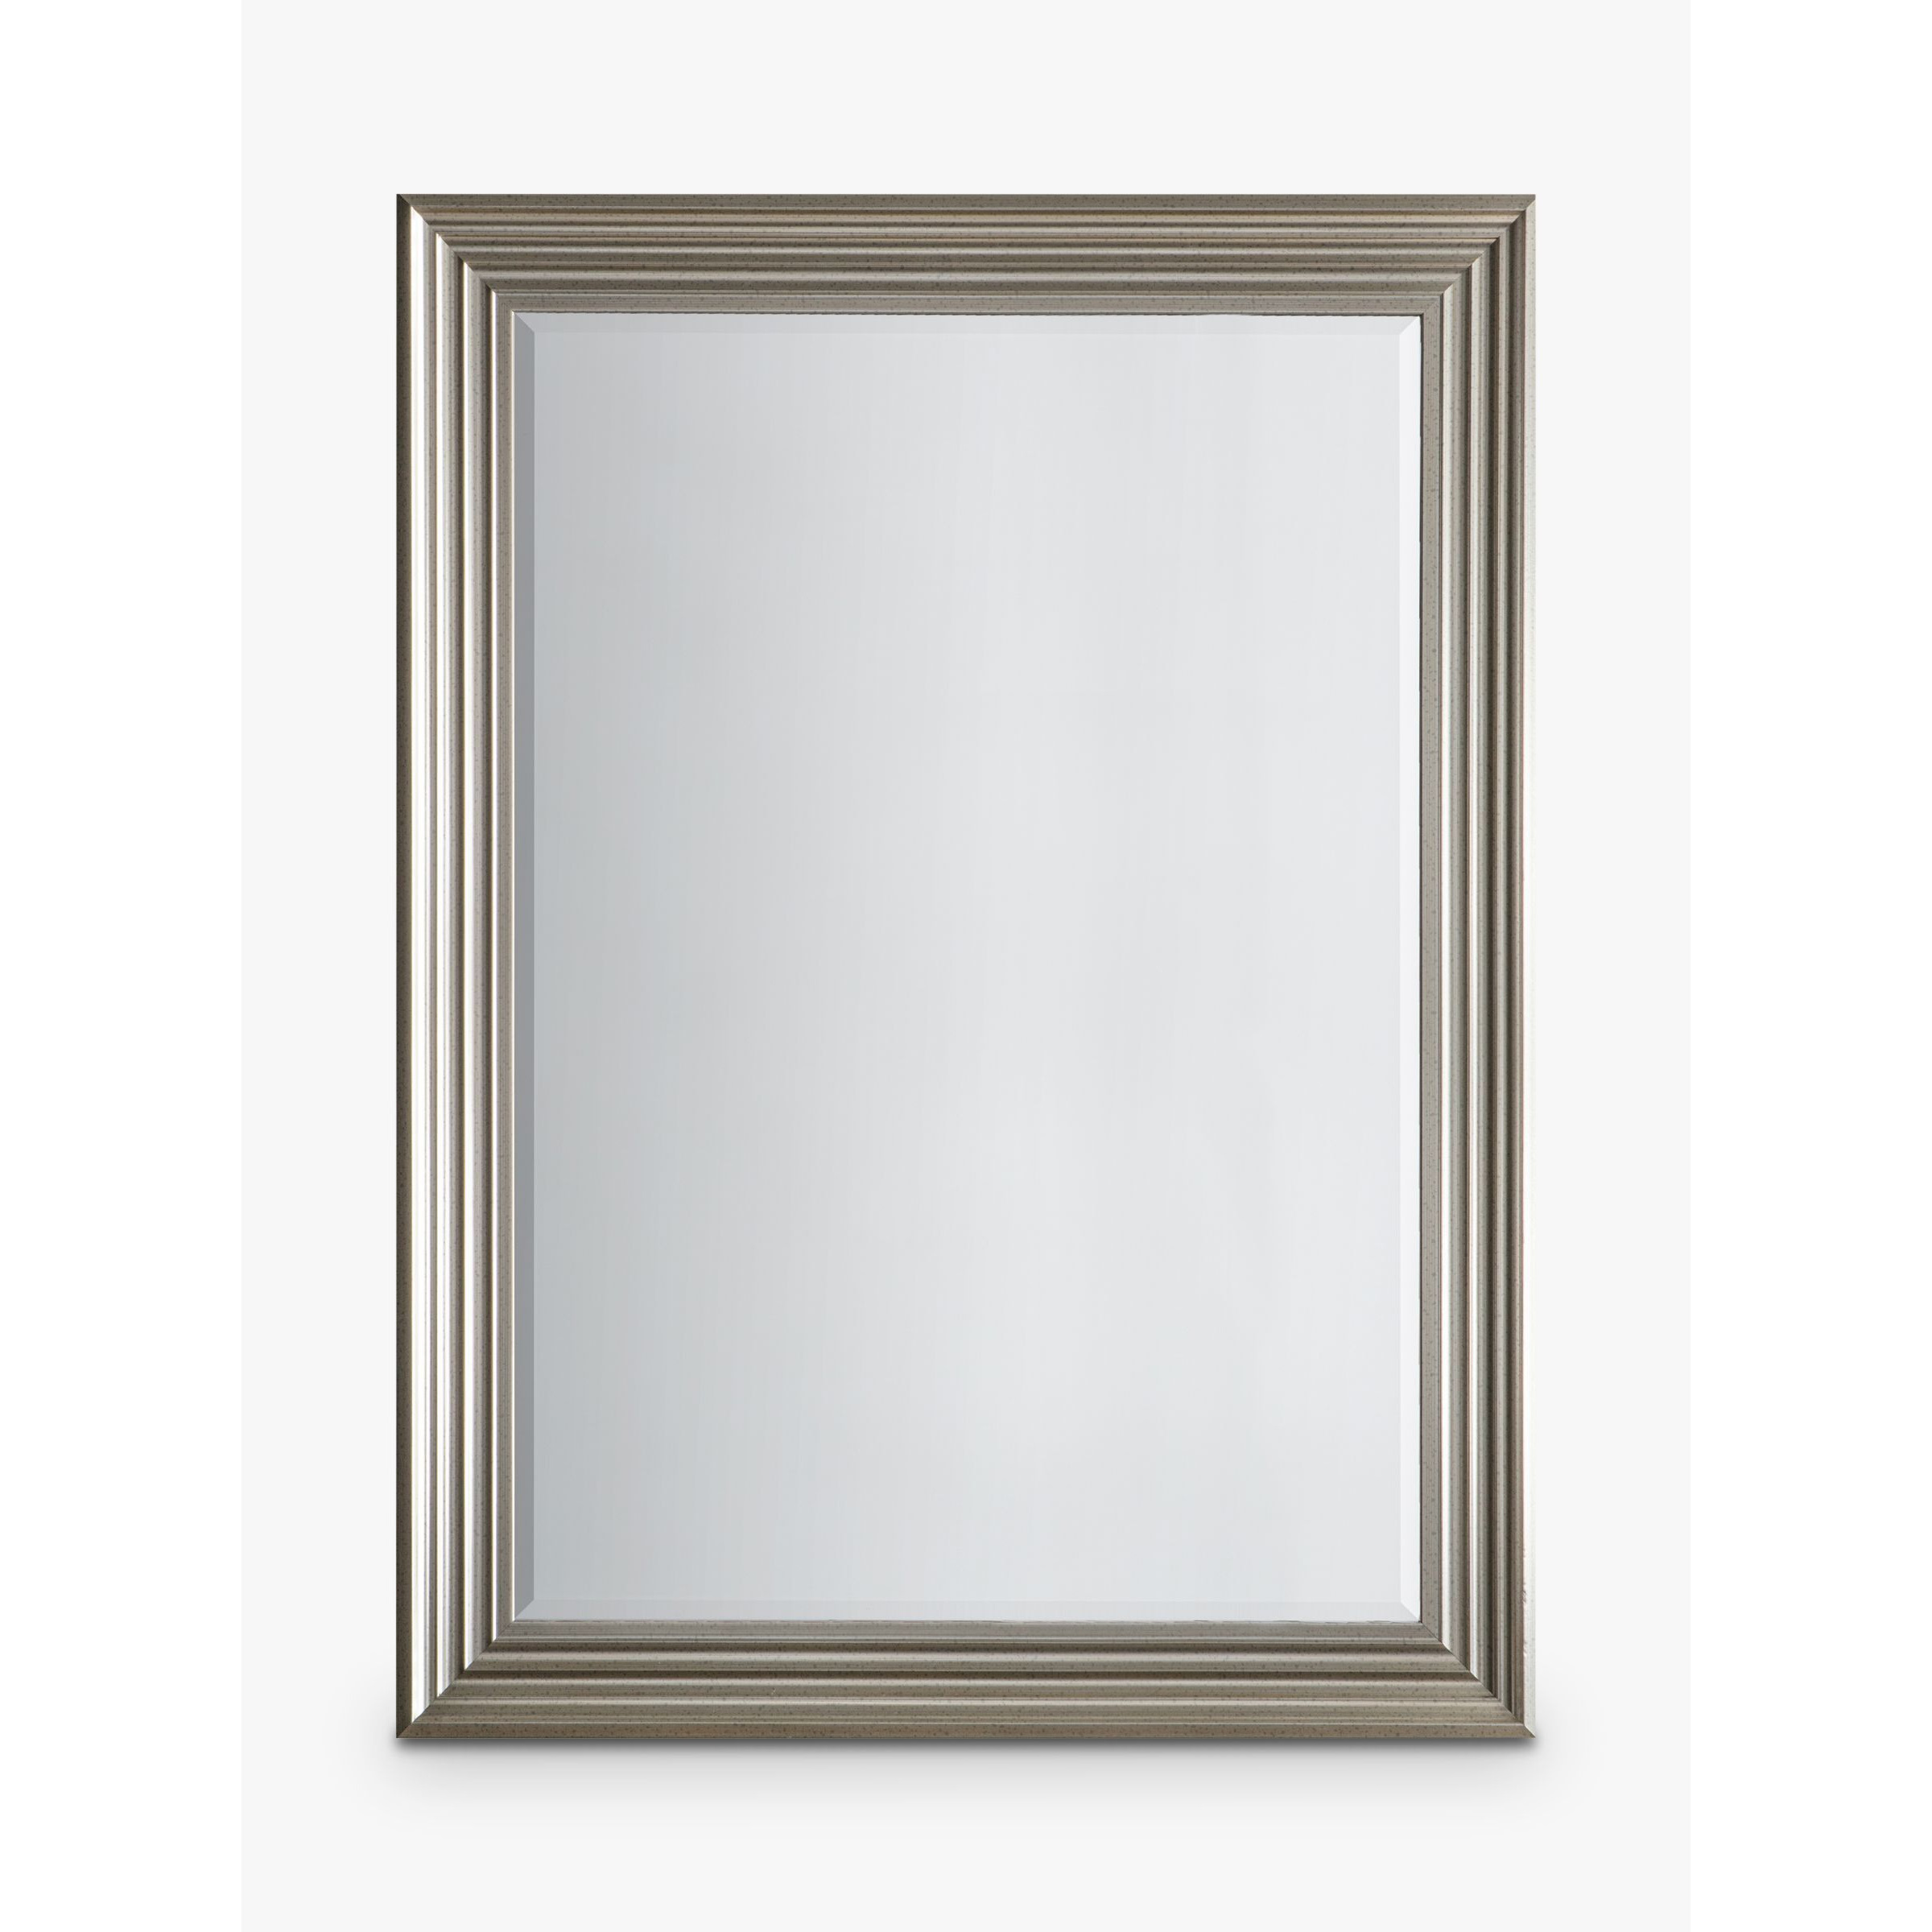 Gallery Direct Haylen Rectangular Wall Mirror, Silver - image 1